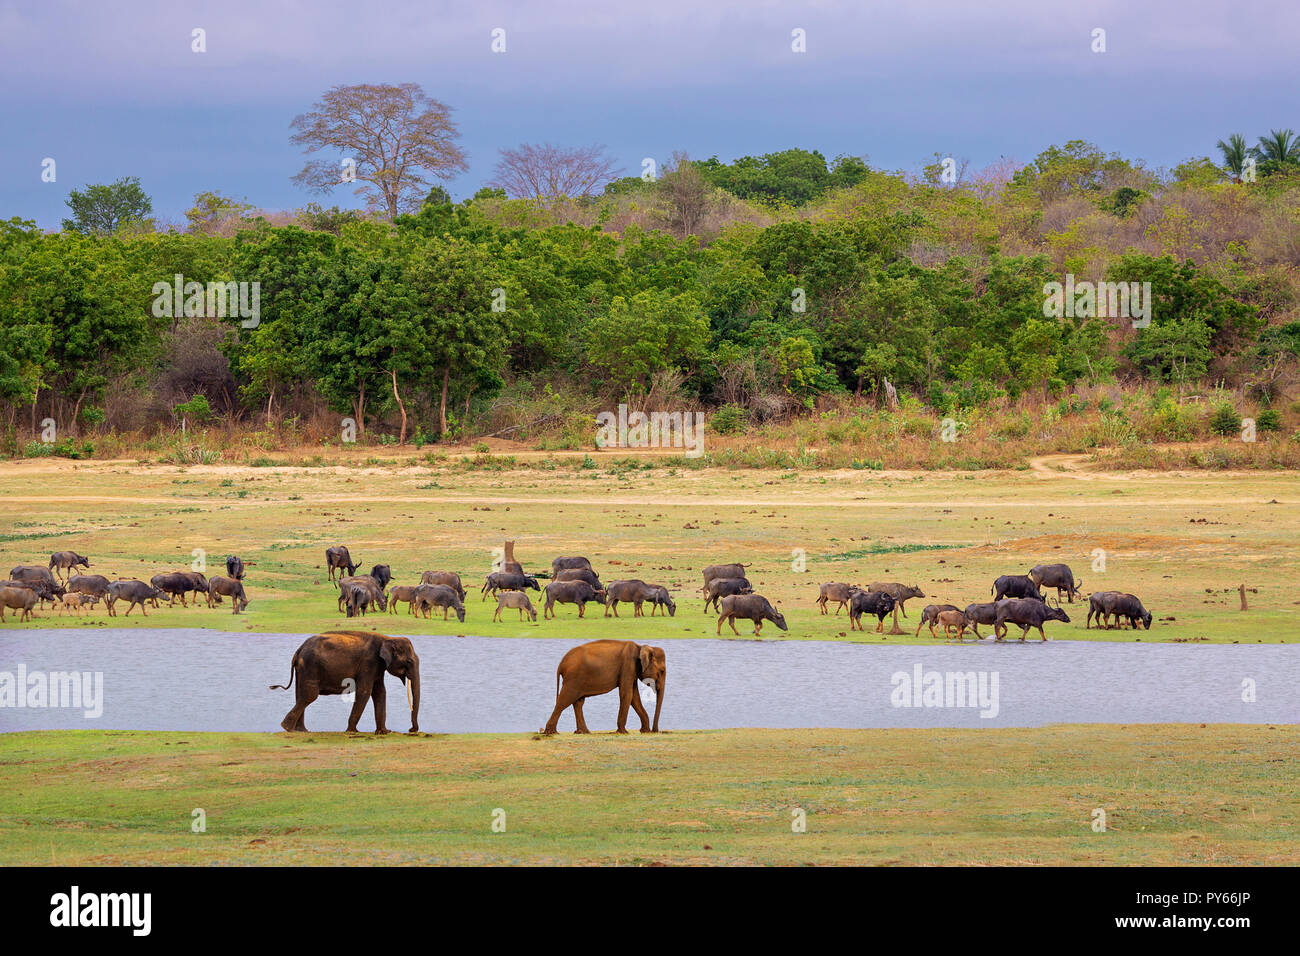 Elephants and buffalos in Uda Walawe, Sri Lanka Stock Photo